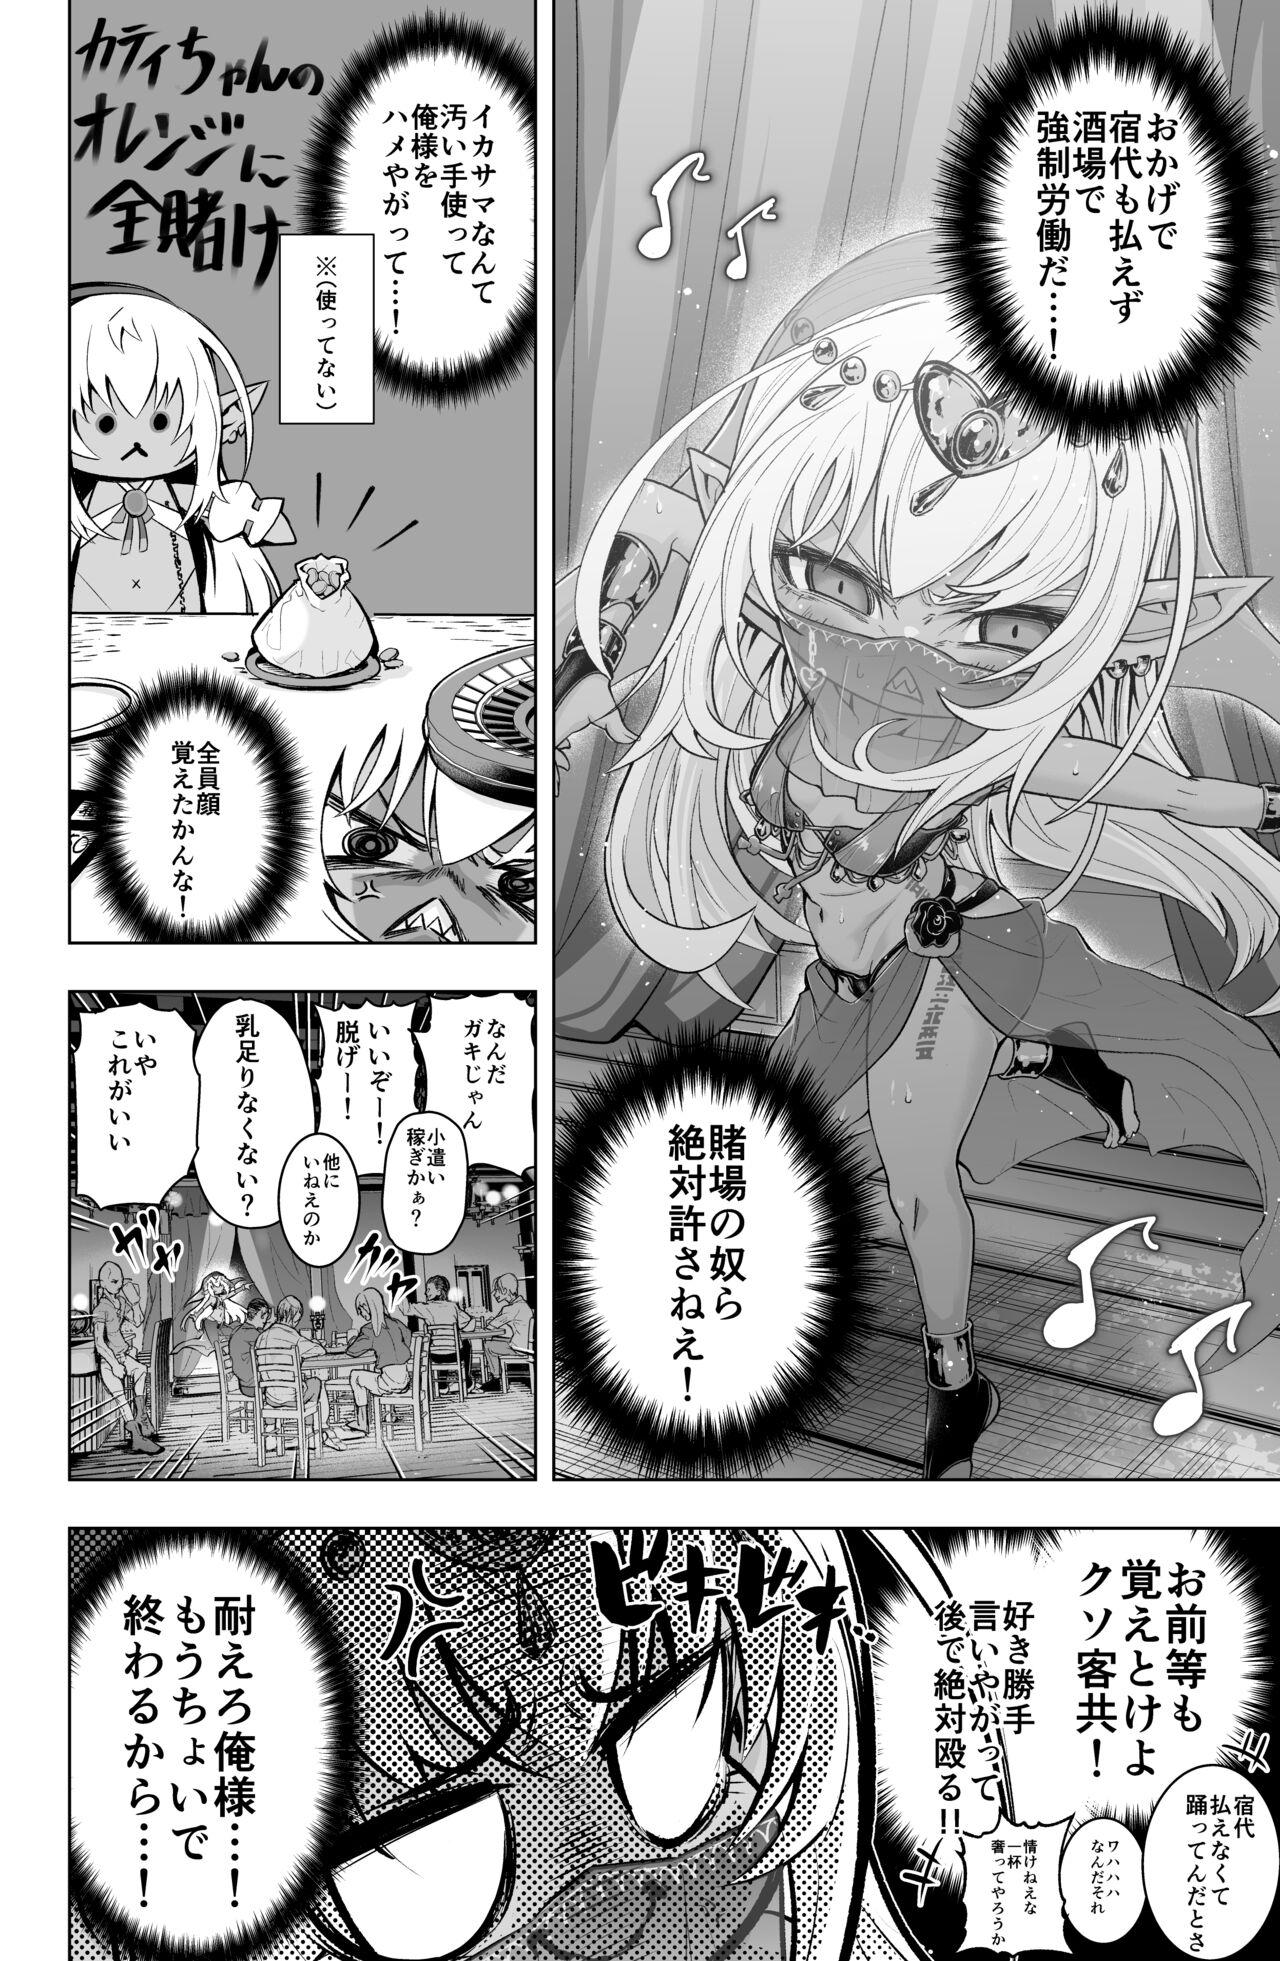 Pelada Dark Elf no Kati-chan no Manga - Original Storyline - Page 2